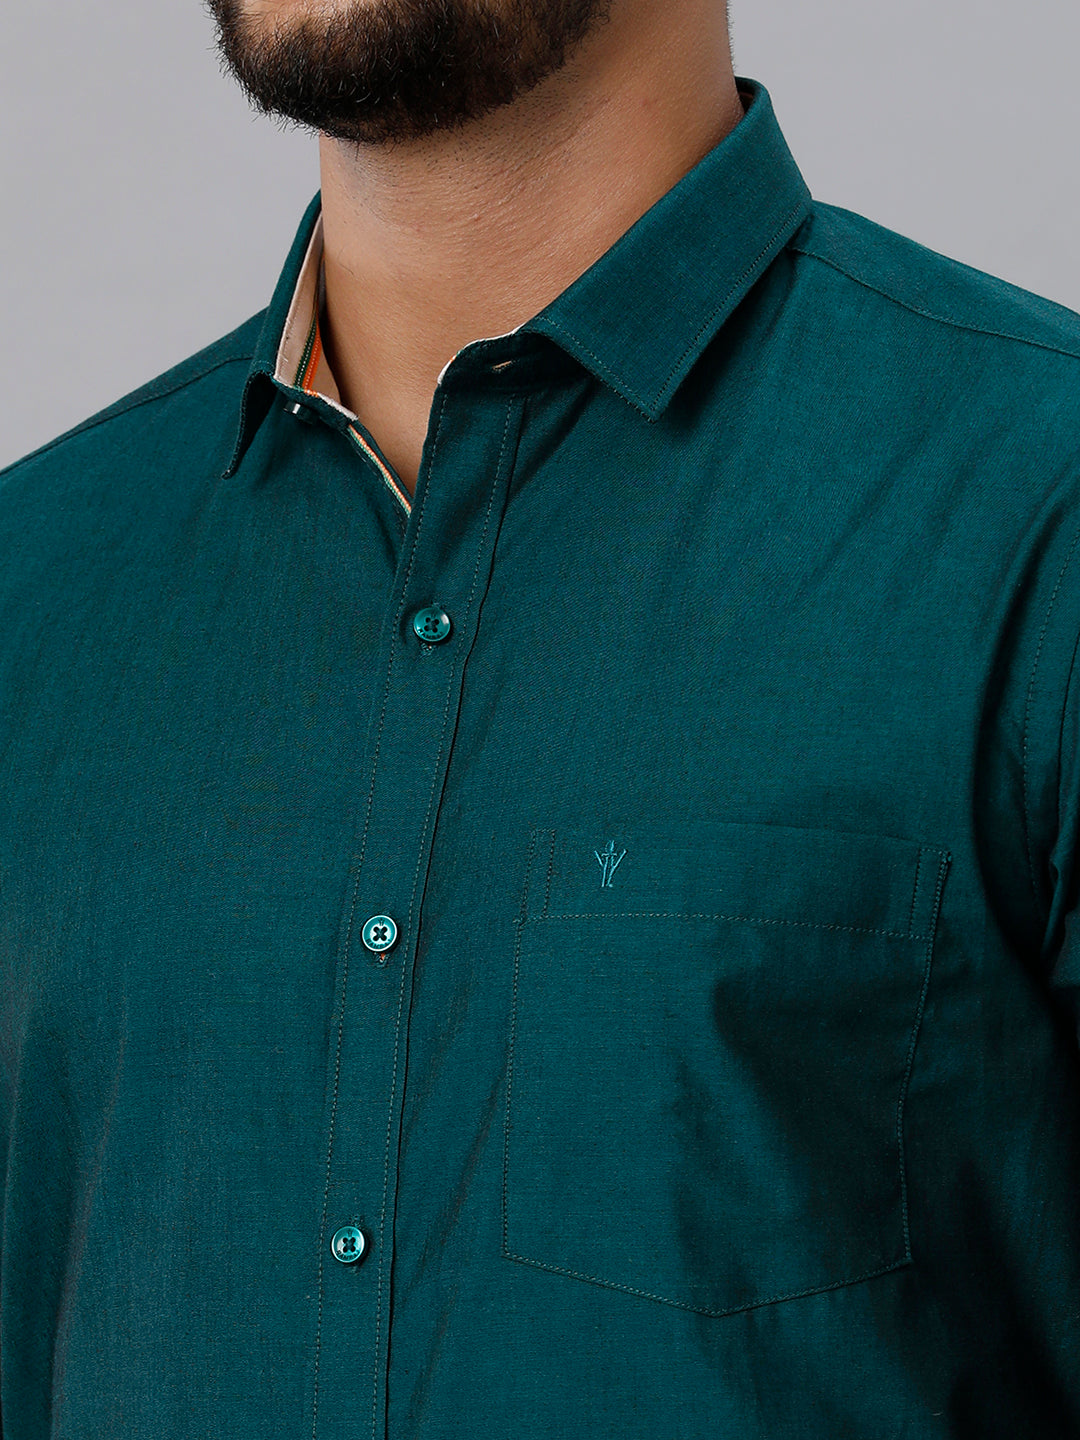 Mens Premium Cotton Formal Shirt Full Sleeves Dark Green MH G116-Zoom view